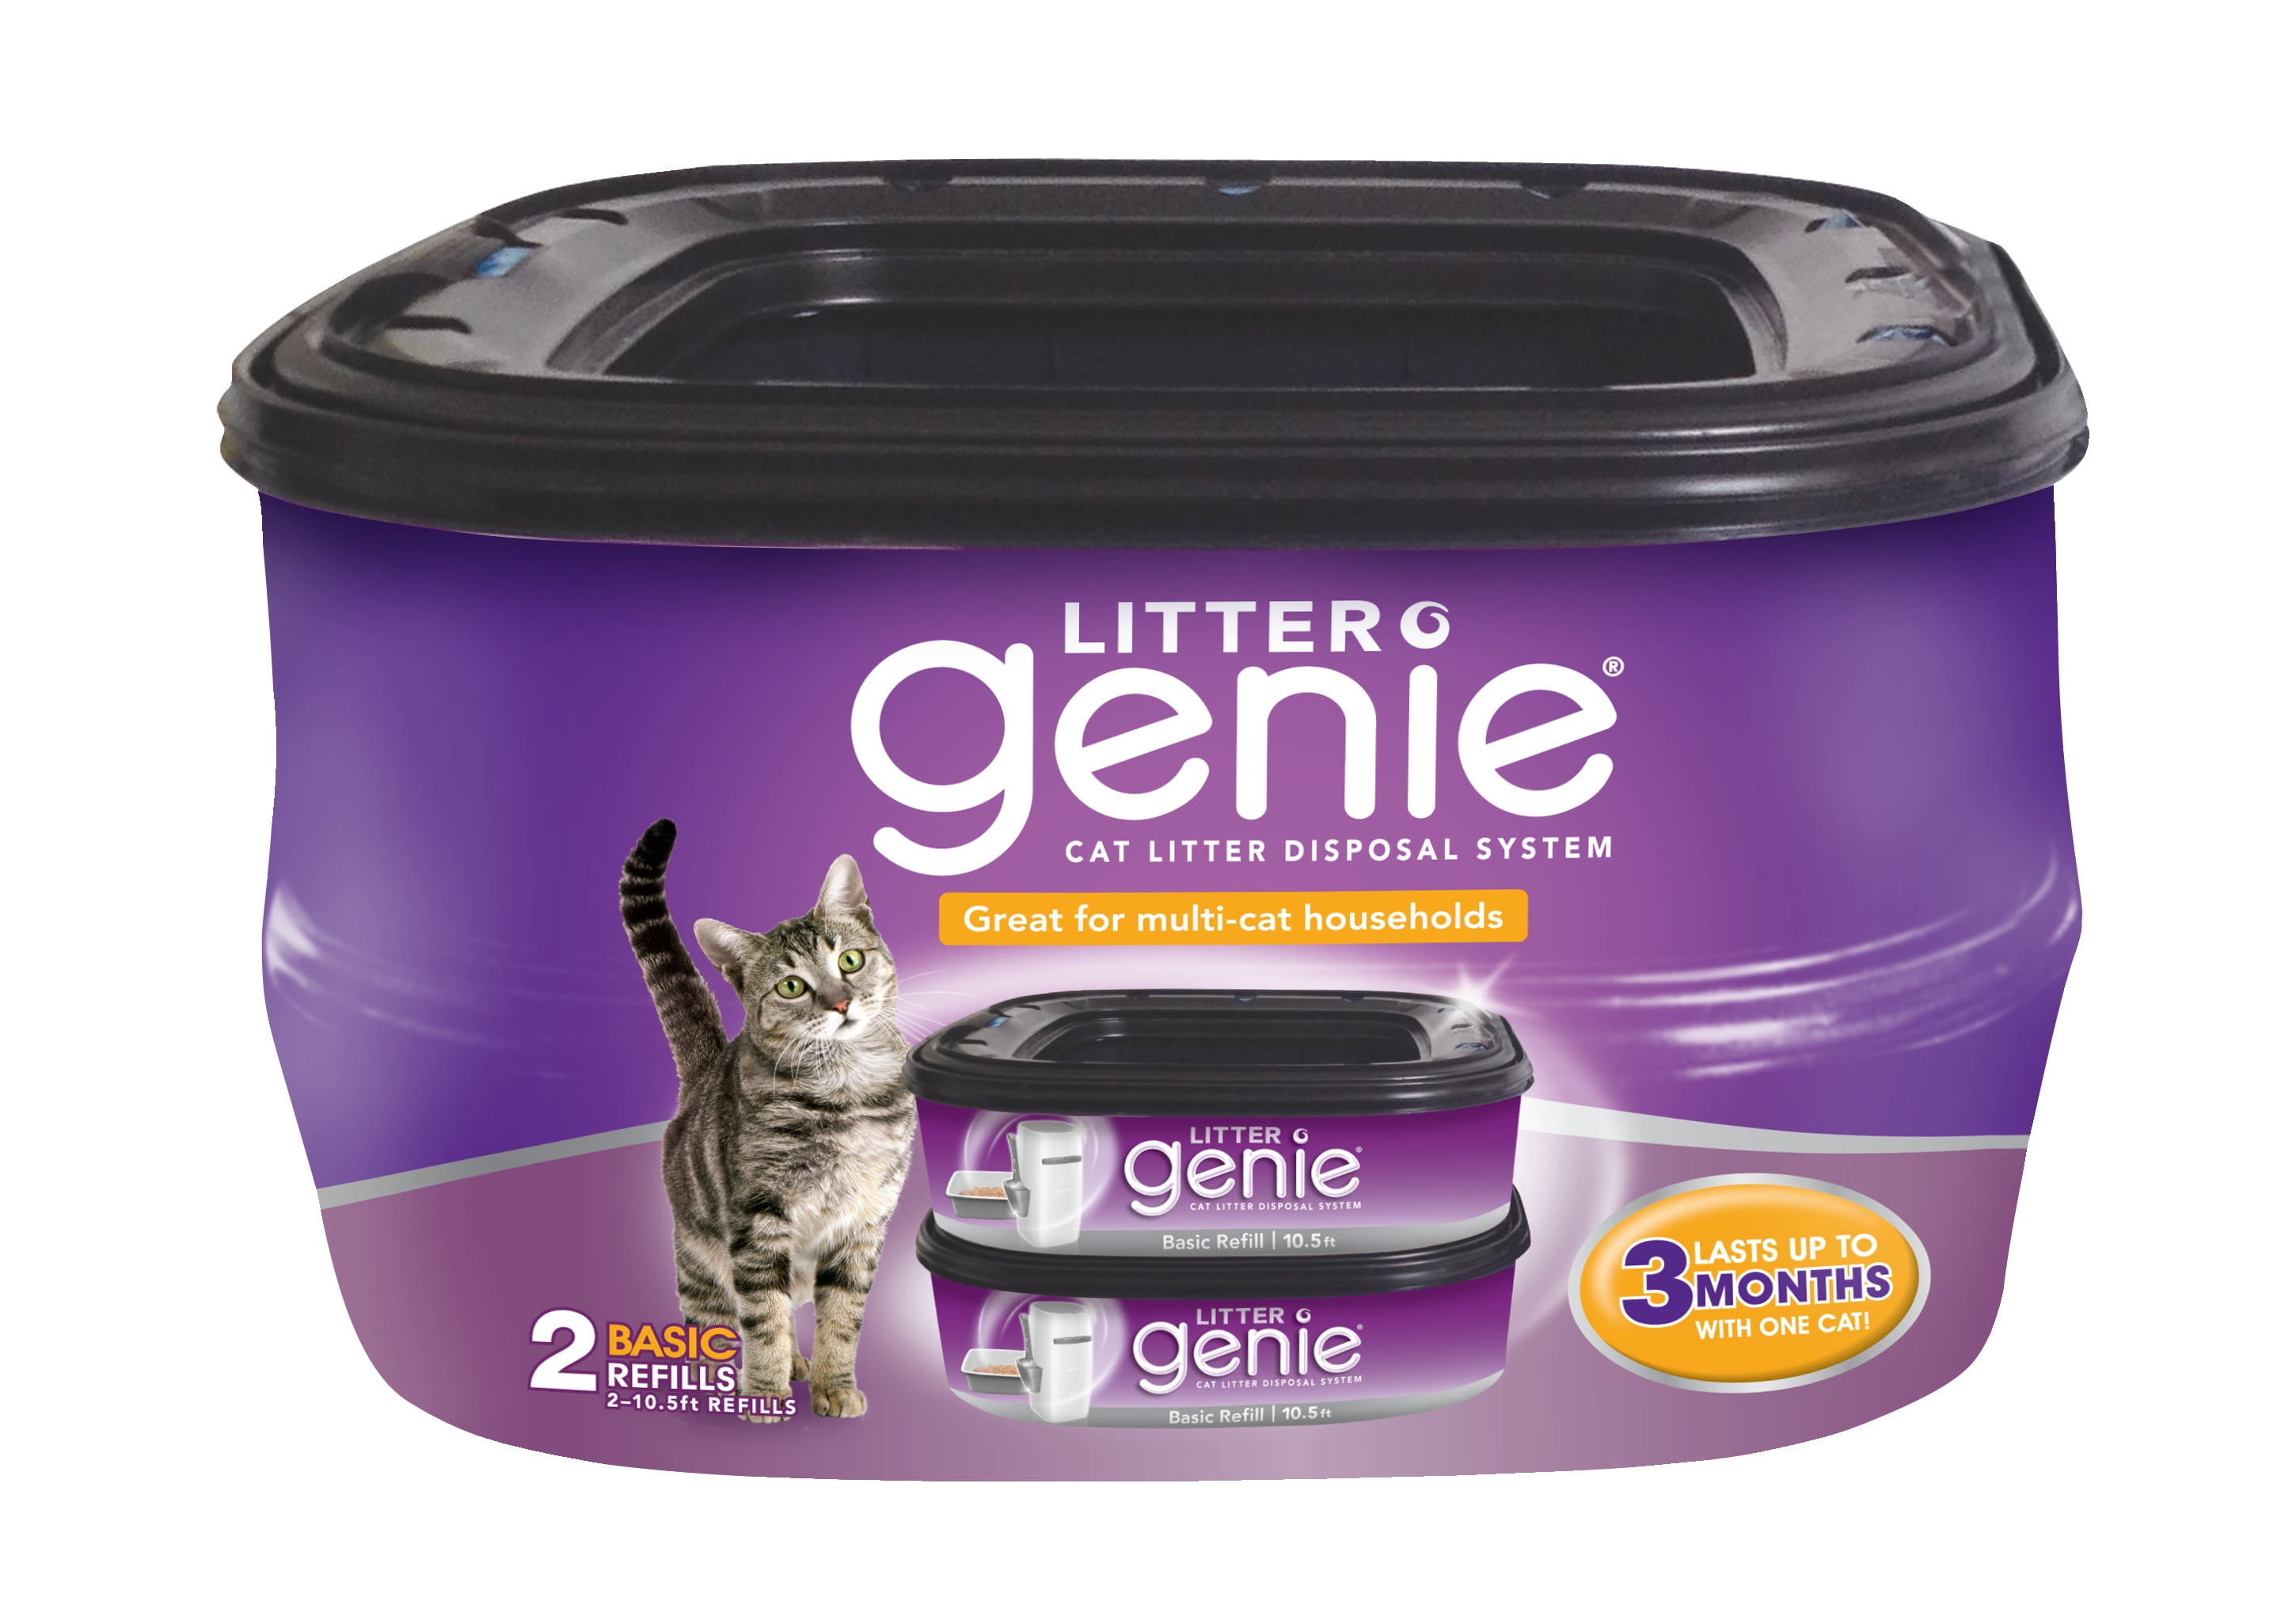 Litter Genie Cat Litter Disposal System Basic Refill, Pack 1 - Count 2